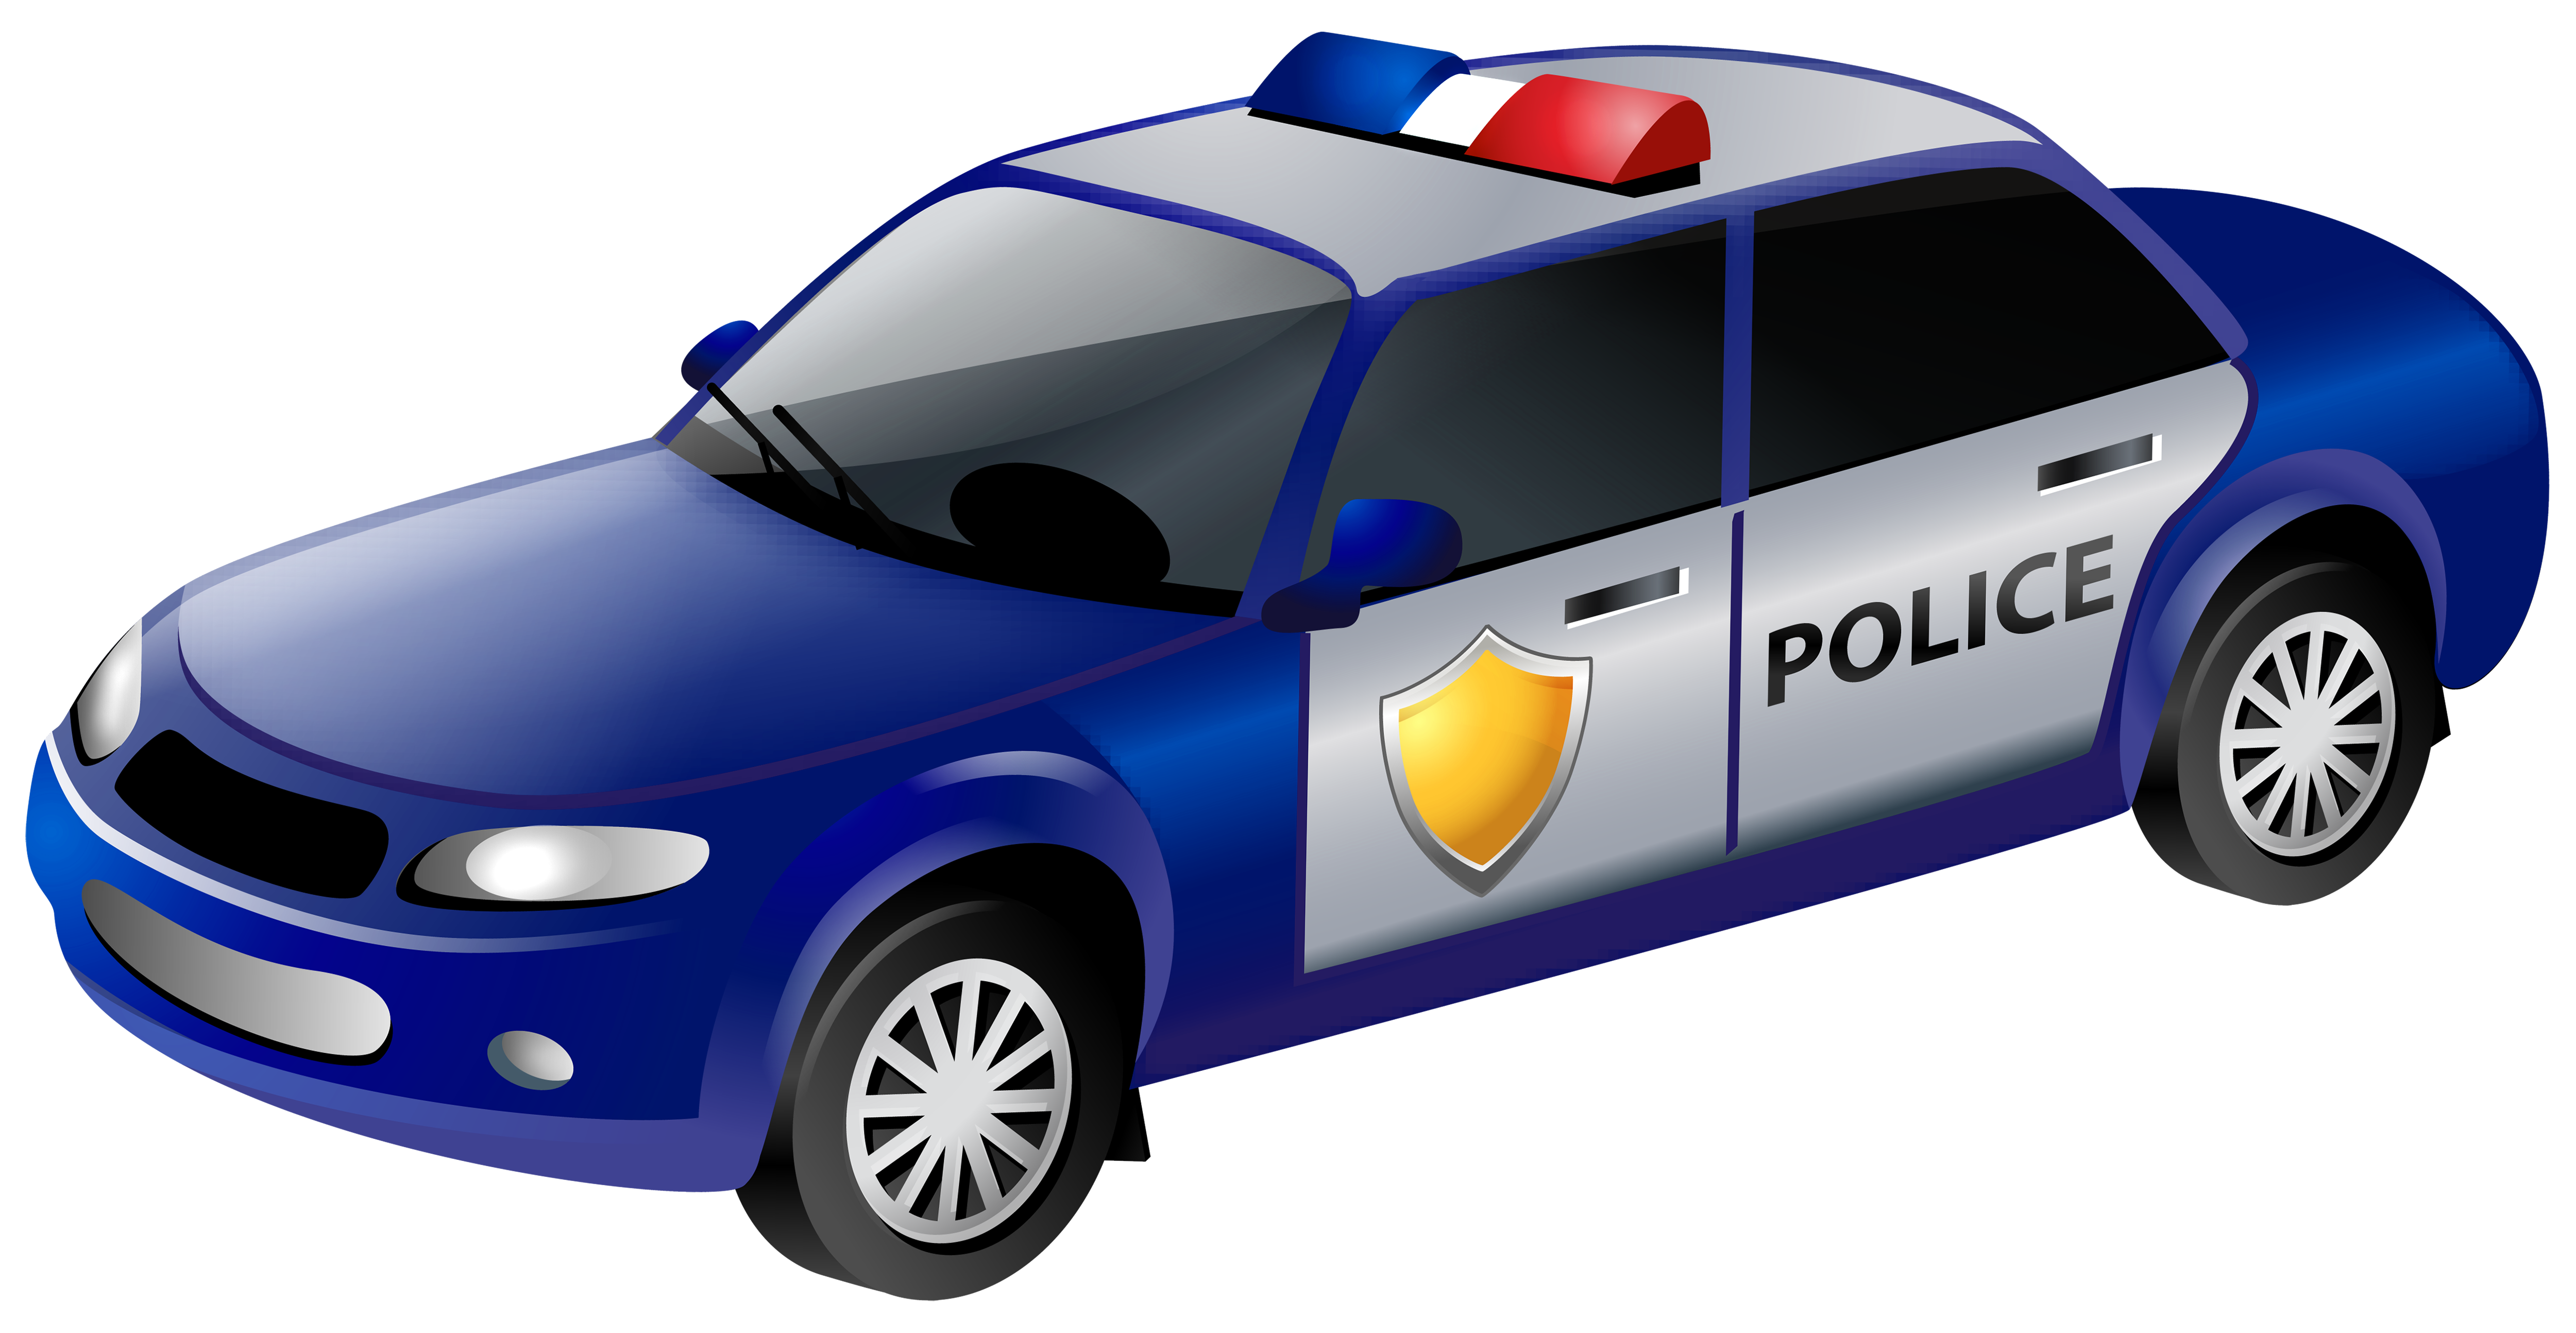 Police Car Clip Art